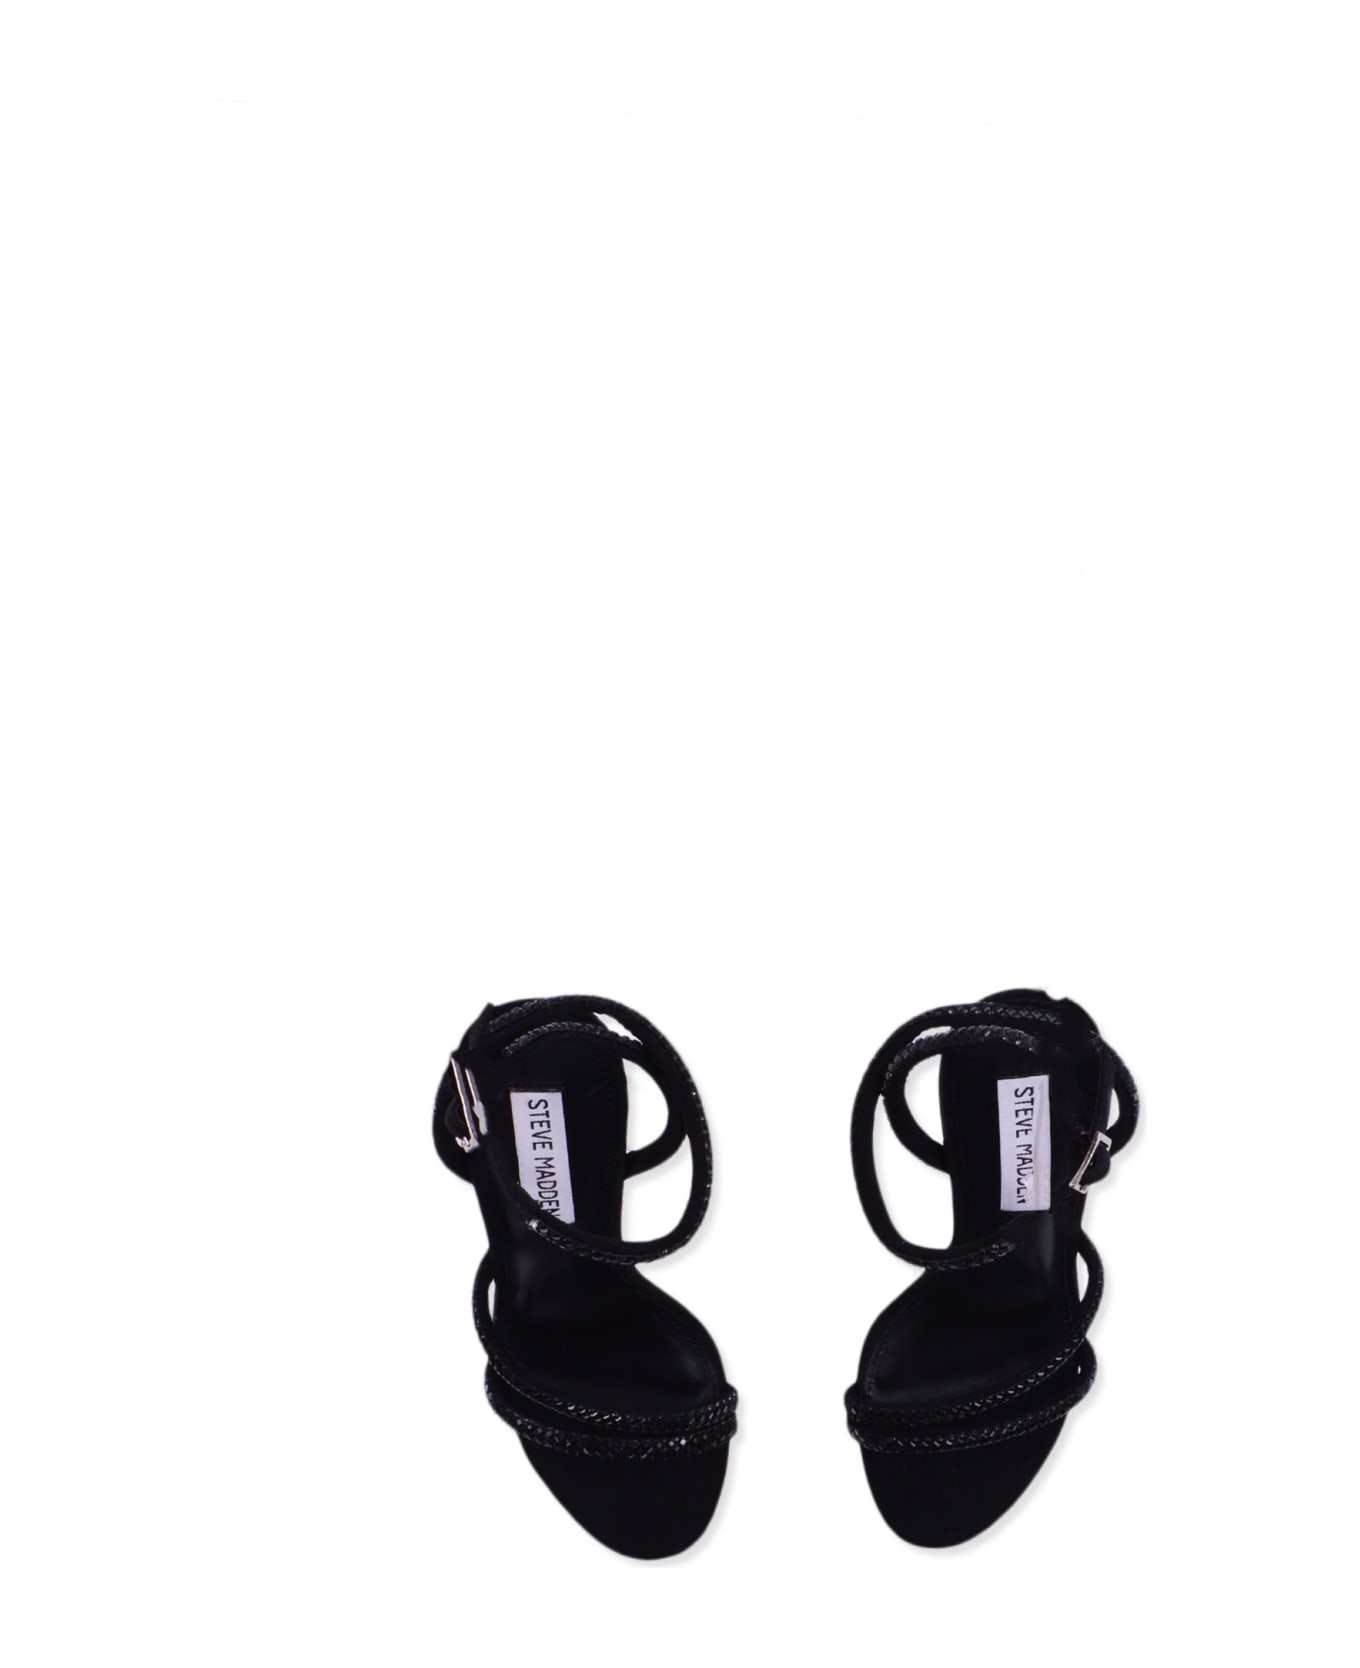 Steve Madden Heel Sandals - Black